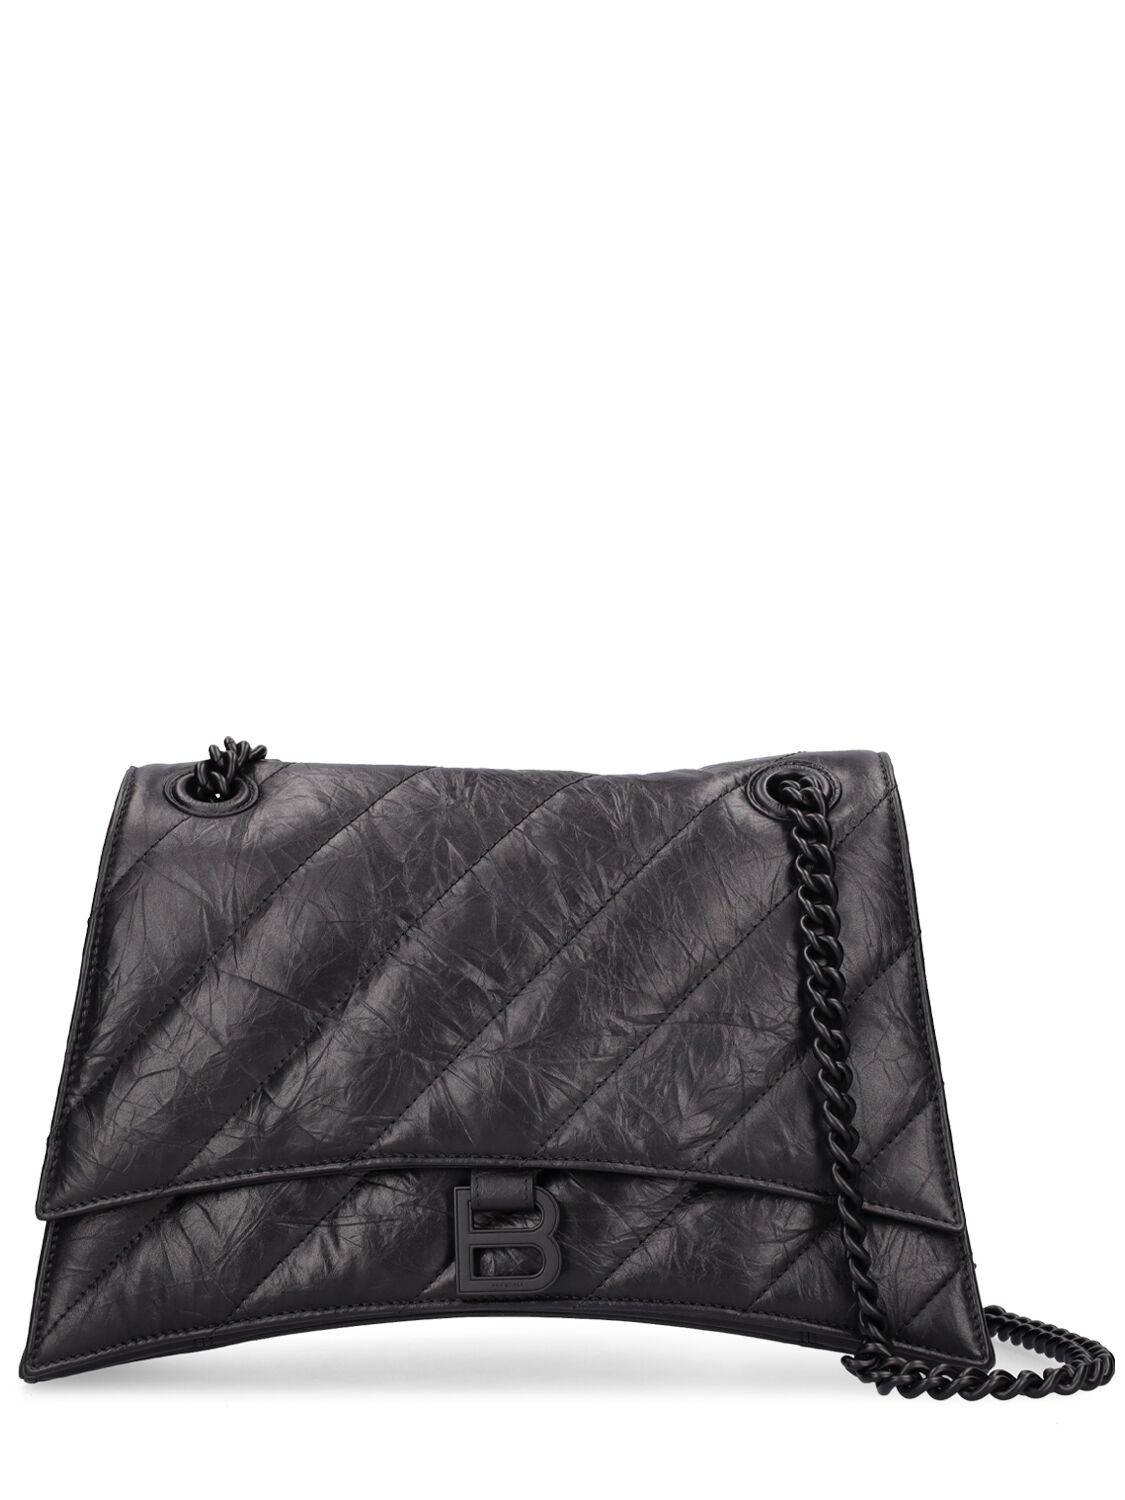 Balenciaga Medium Crush Quilted Leather Chain Bag In Black